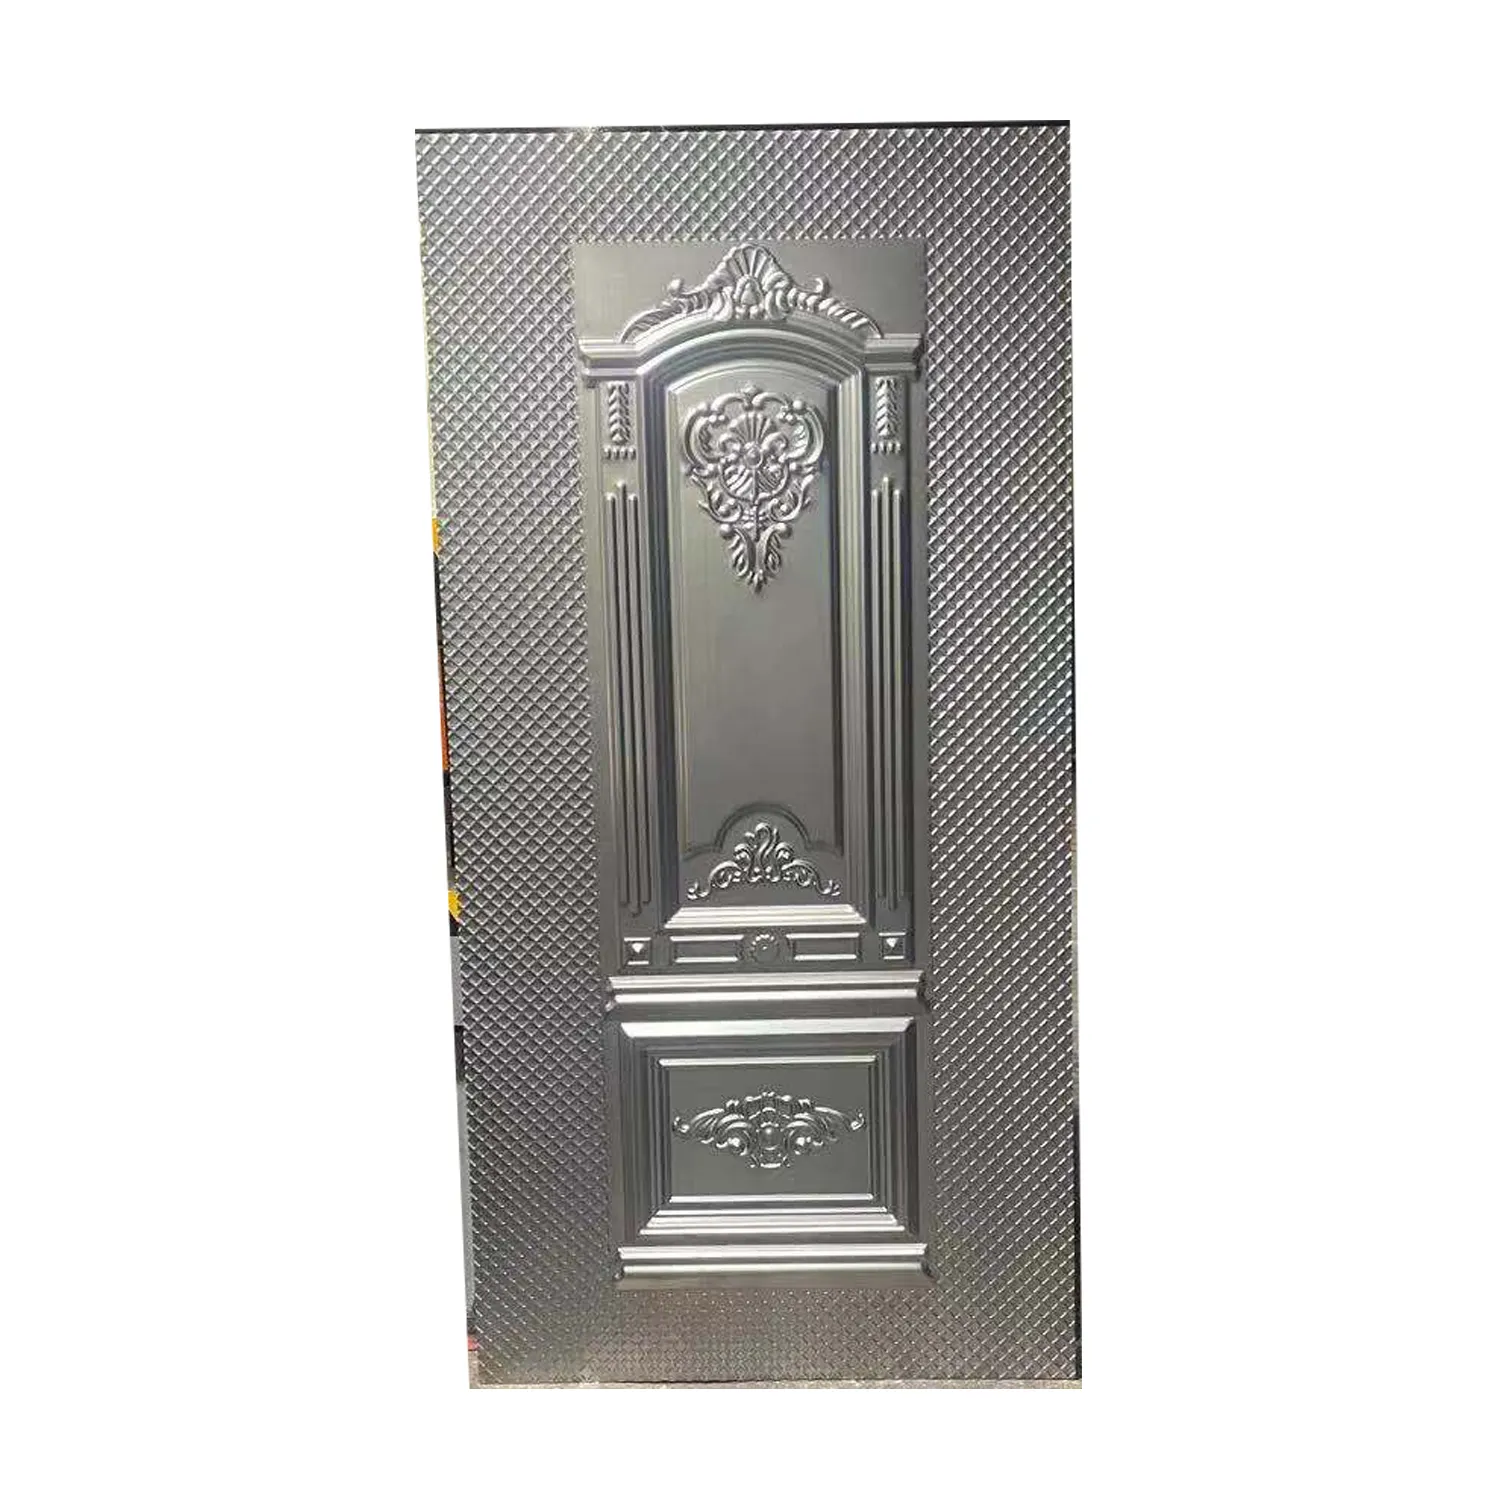 Cold Rolled Iron Embossed galvanized steel sheet 2 panel/stamped steel door skin